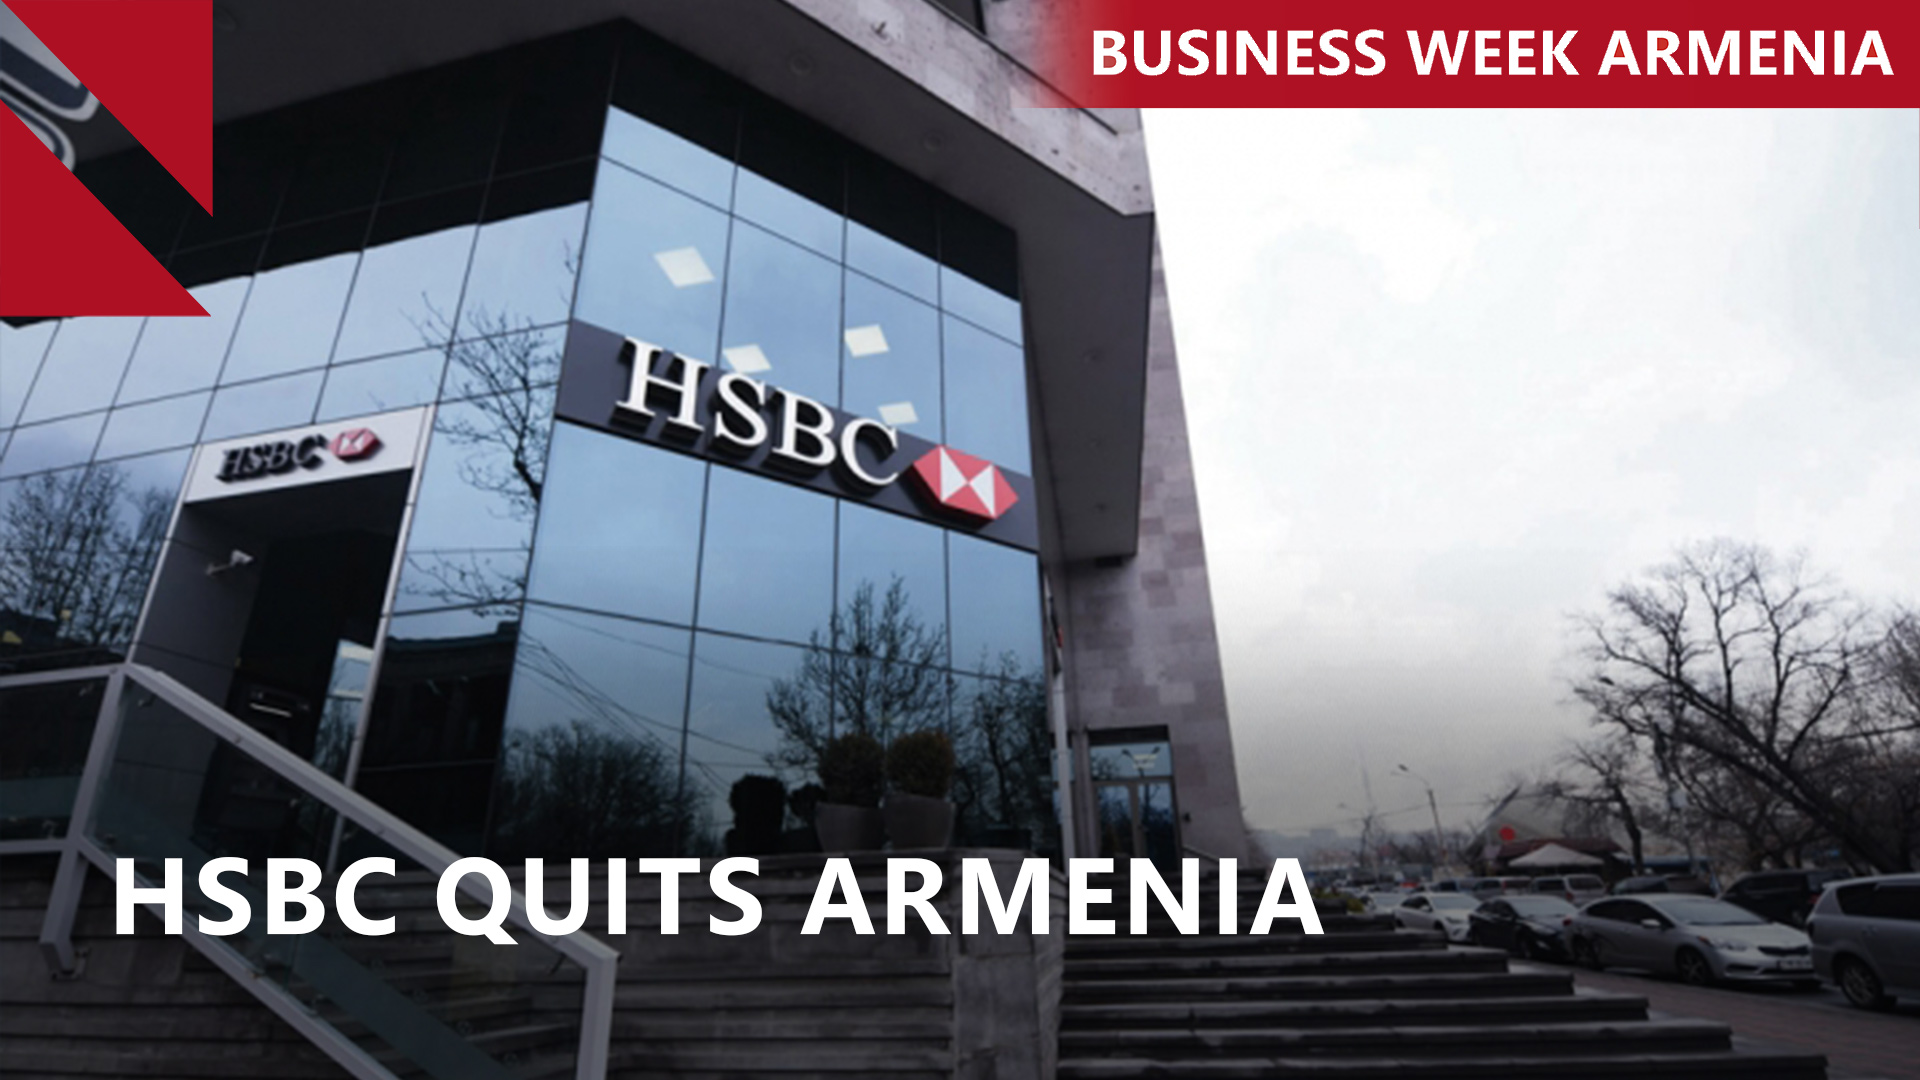 HSBC-QUITS-ARMENIA